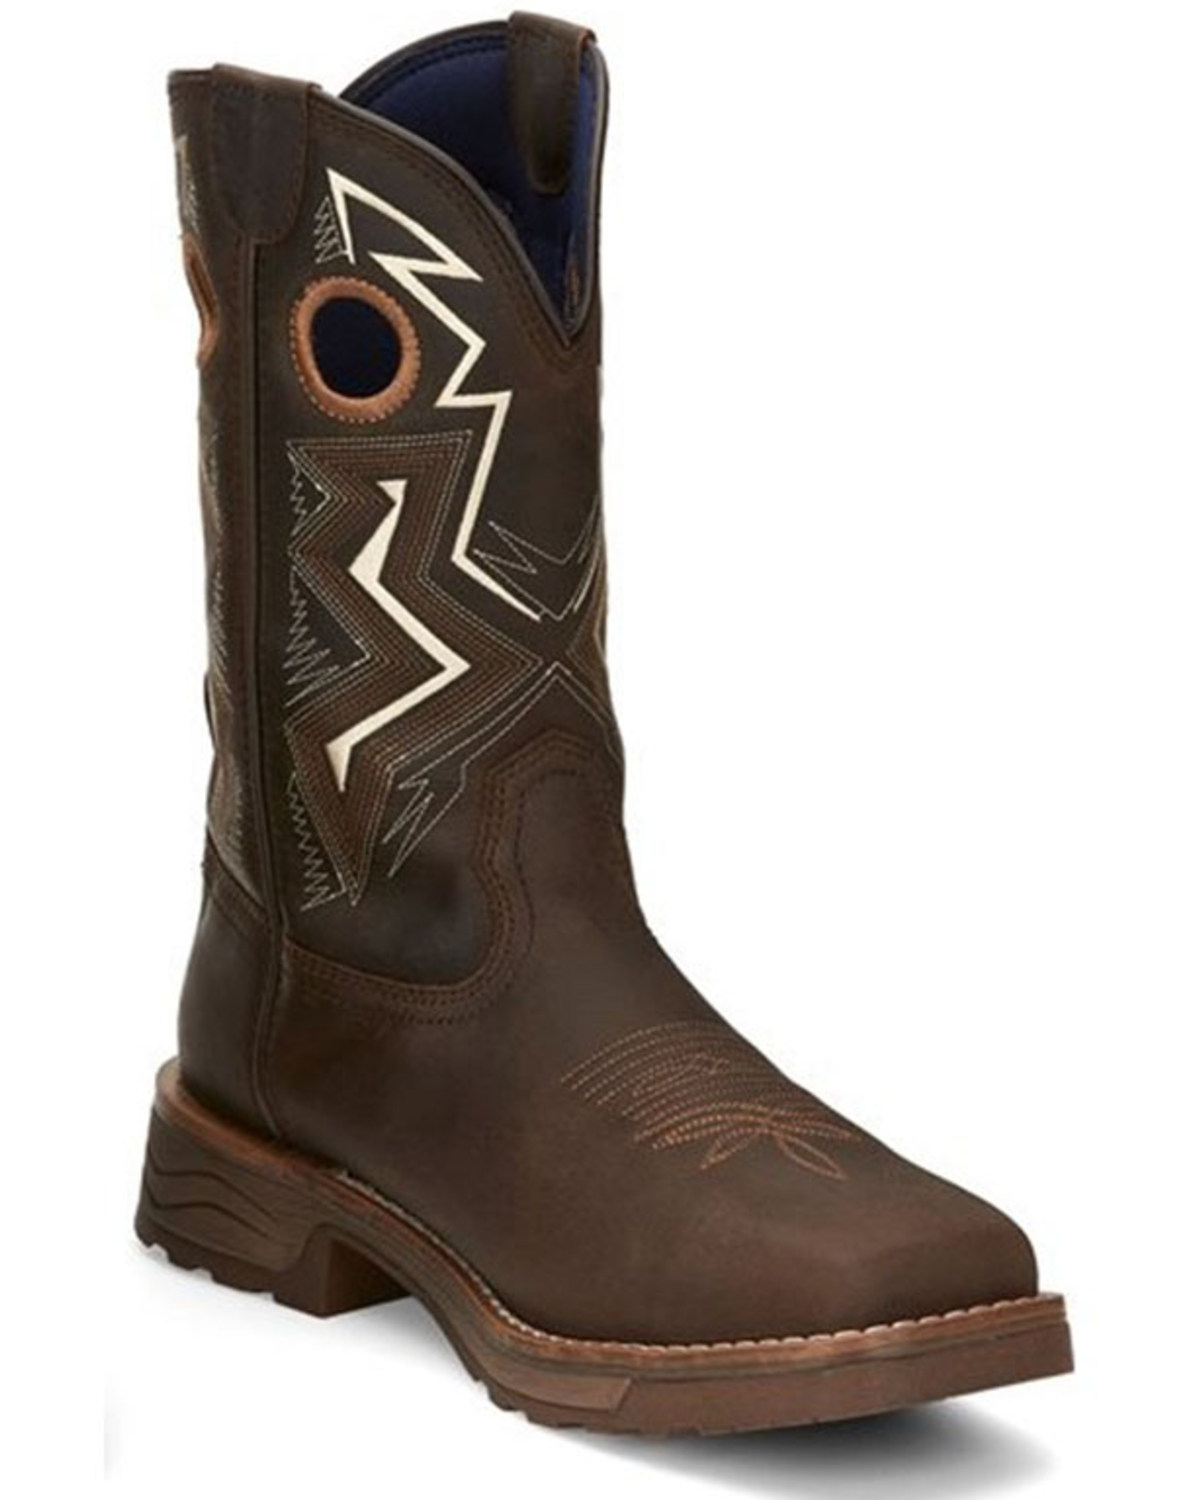 Tony Lama Men's Force Waterproof Western Work Boots - Composite Toe